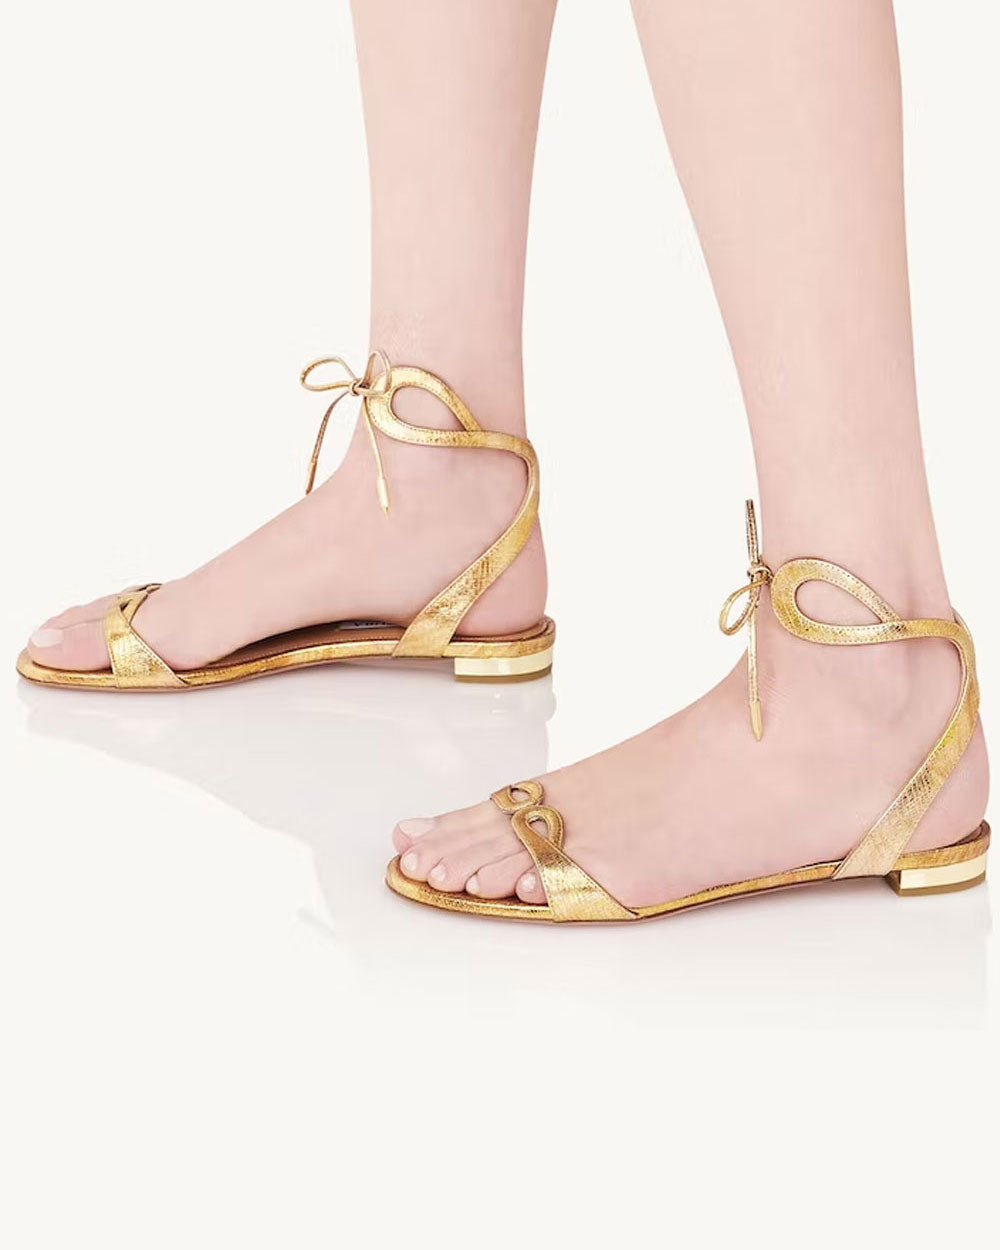 Tessa Sandals in Gold